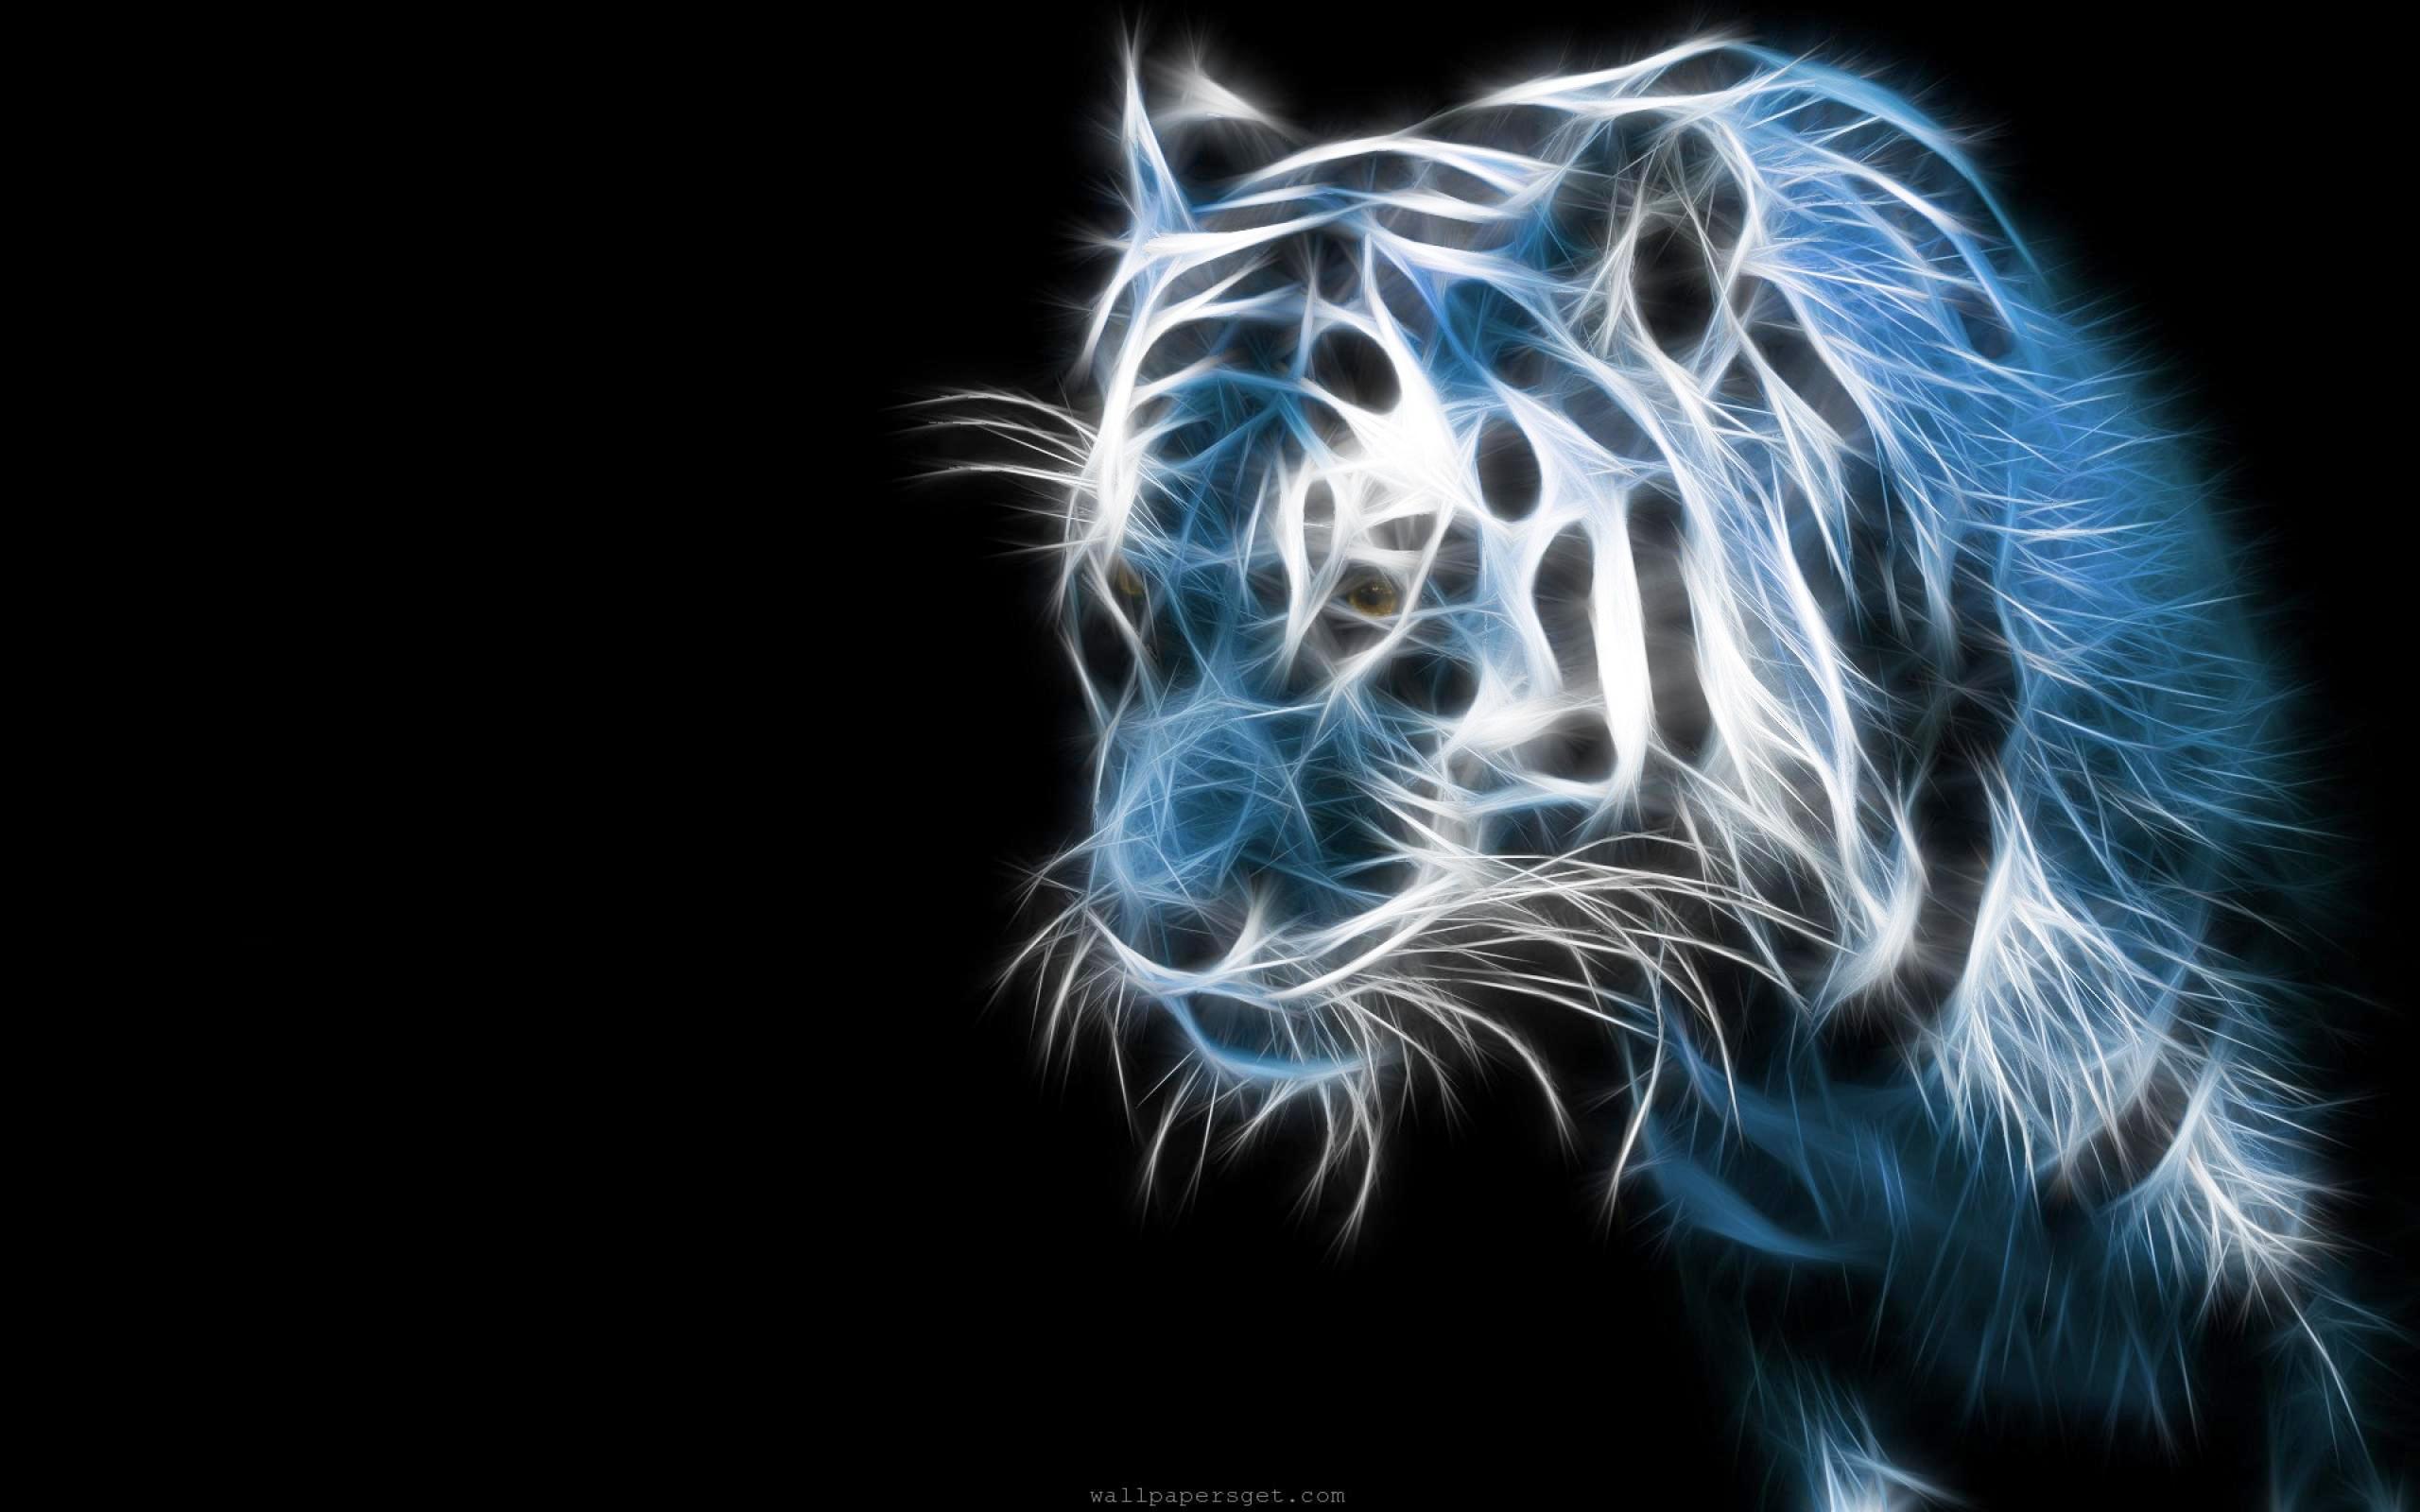 IW: Tiger Wallpaper, Beautiful Tiger Wallpaper